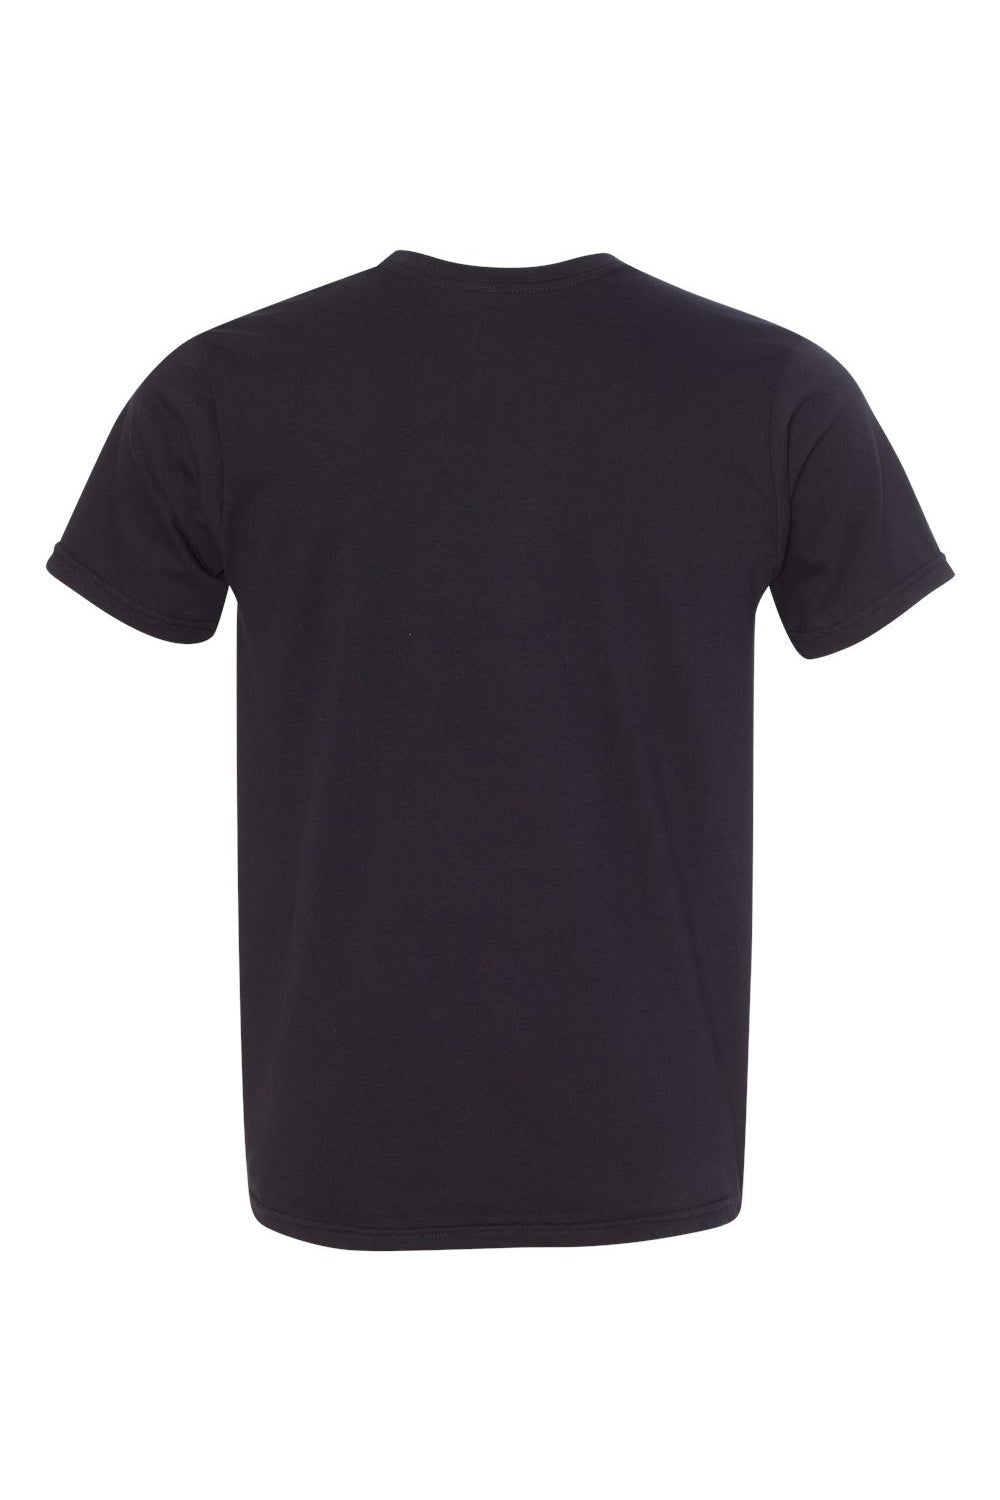 Bayside 5000 Mens USA Made Short Sleeve Crewneck T-Shirt Black Flat Back